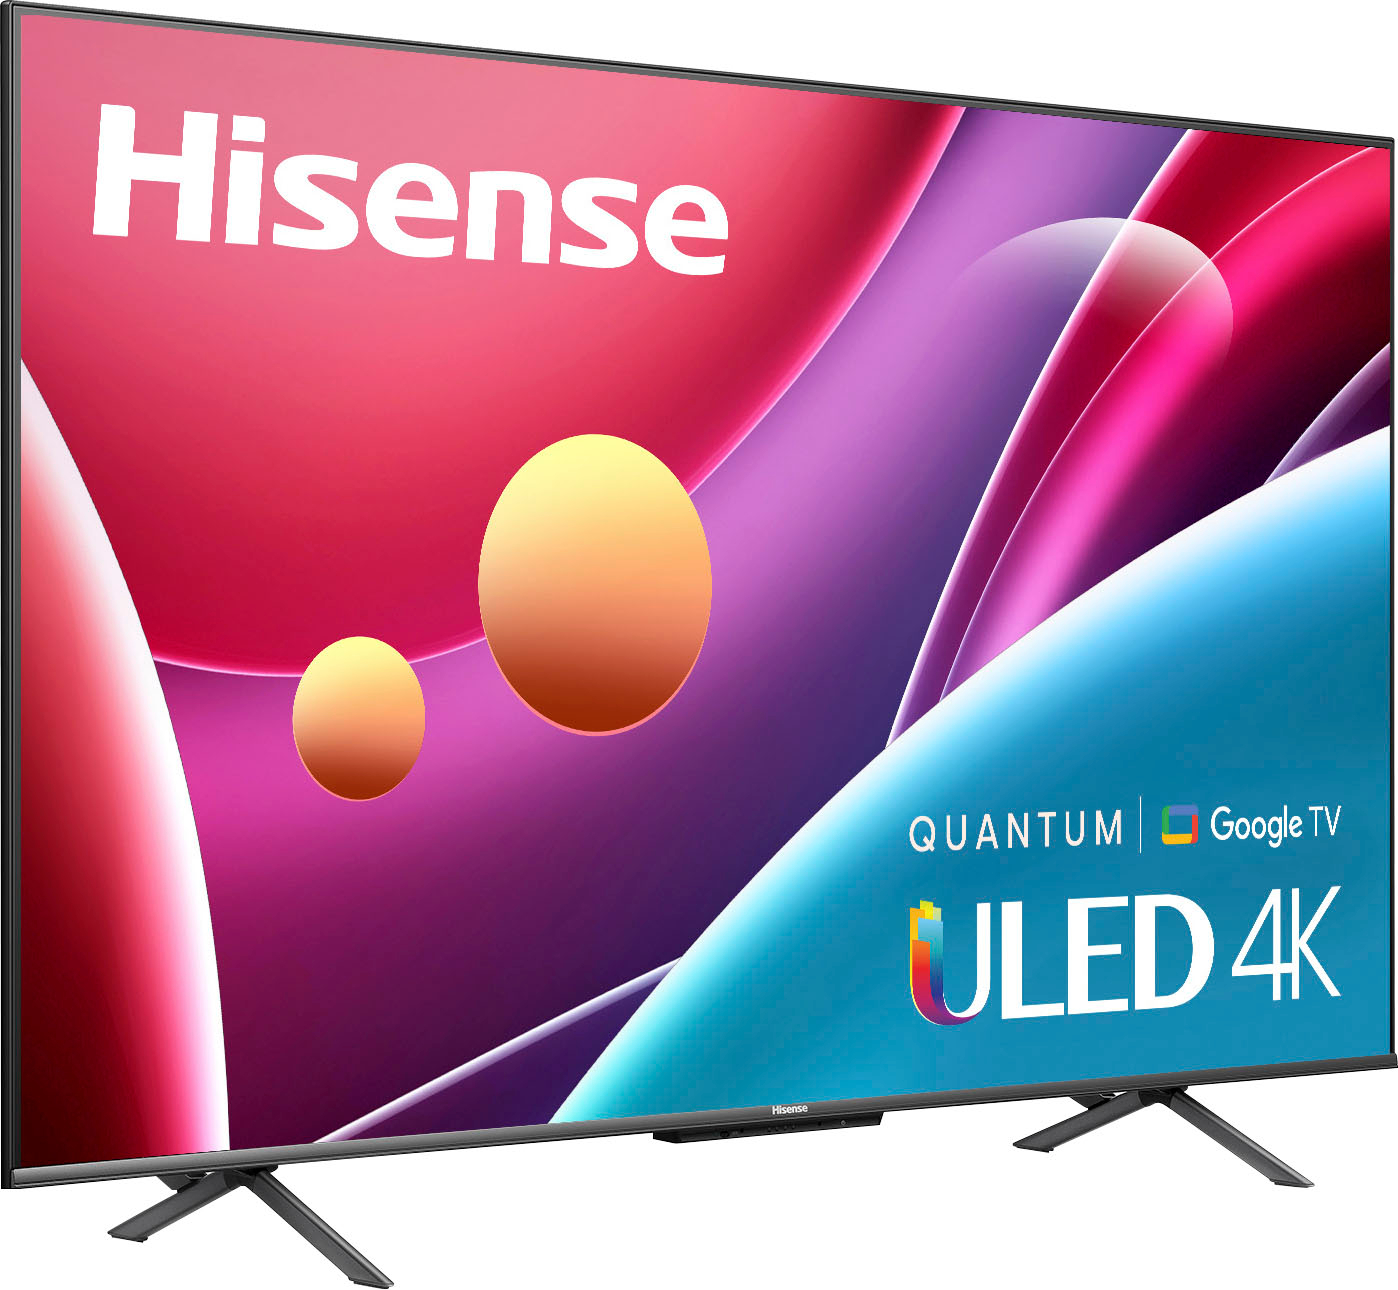 Hisense 75" U6H (2022) Q-ULED 4K UHD HDR Google TV @ Best Buy $699.99